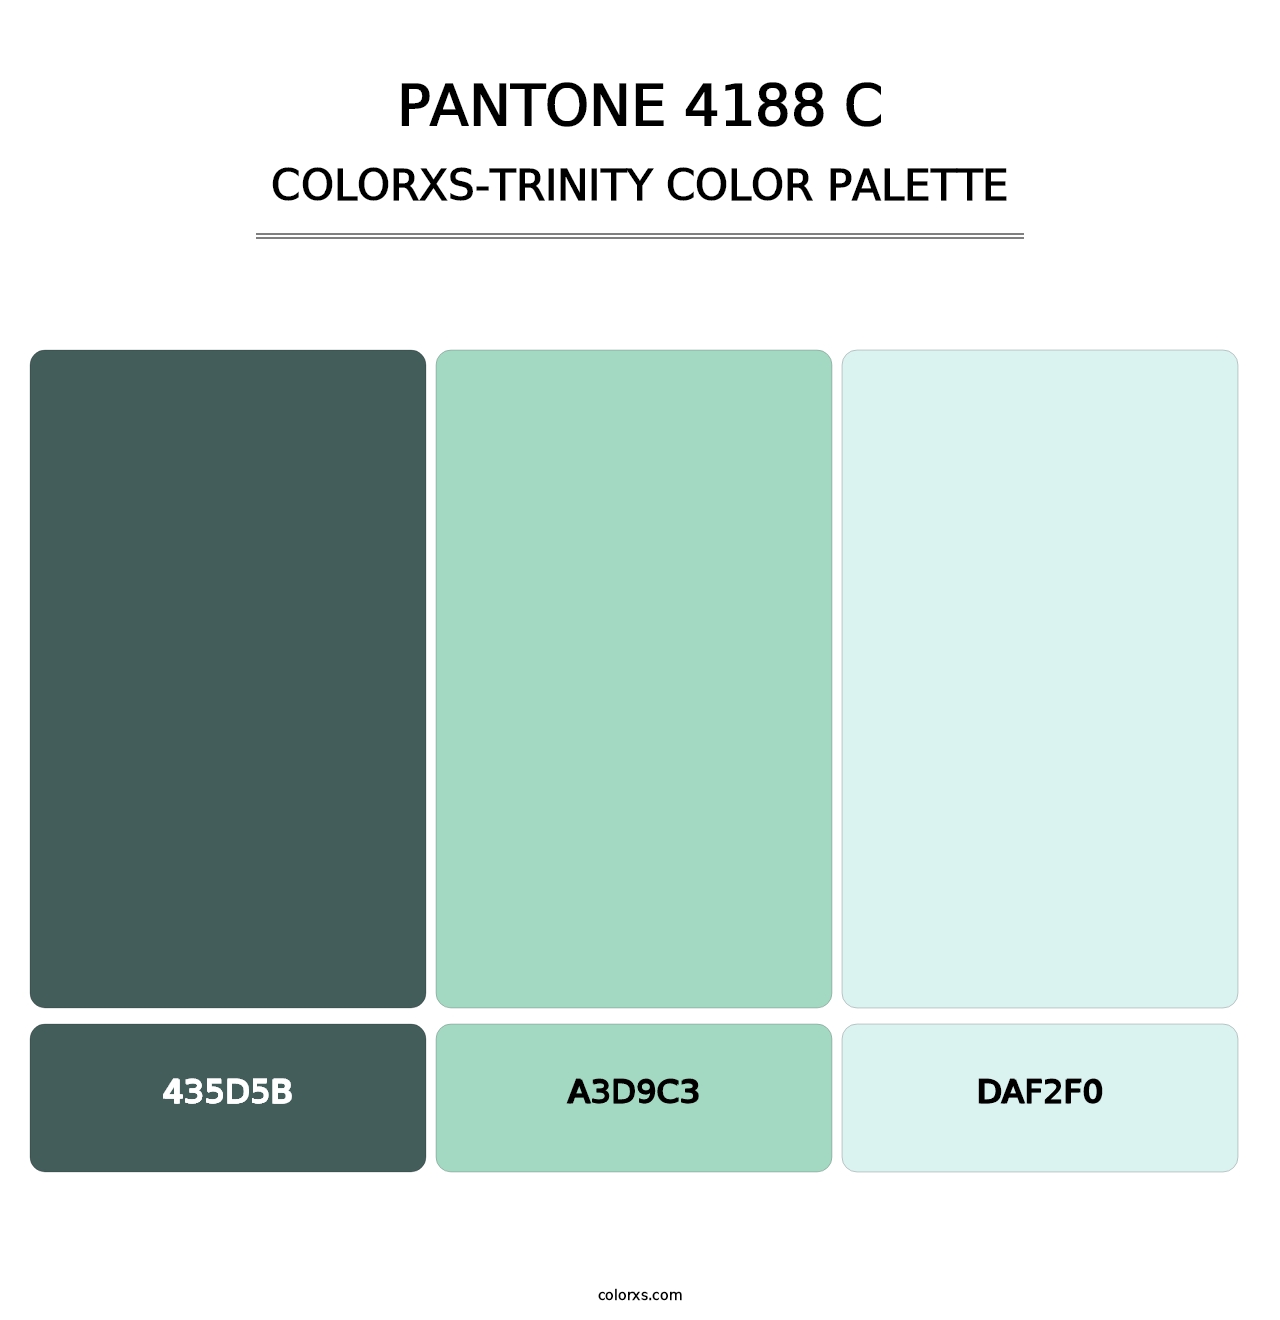 PANTONE 4188 C - Colorxs Trinity Palette